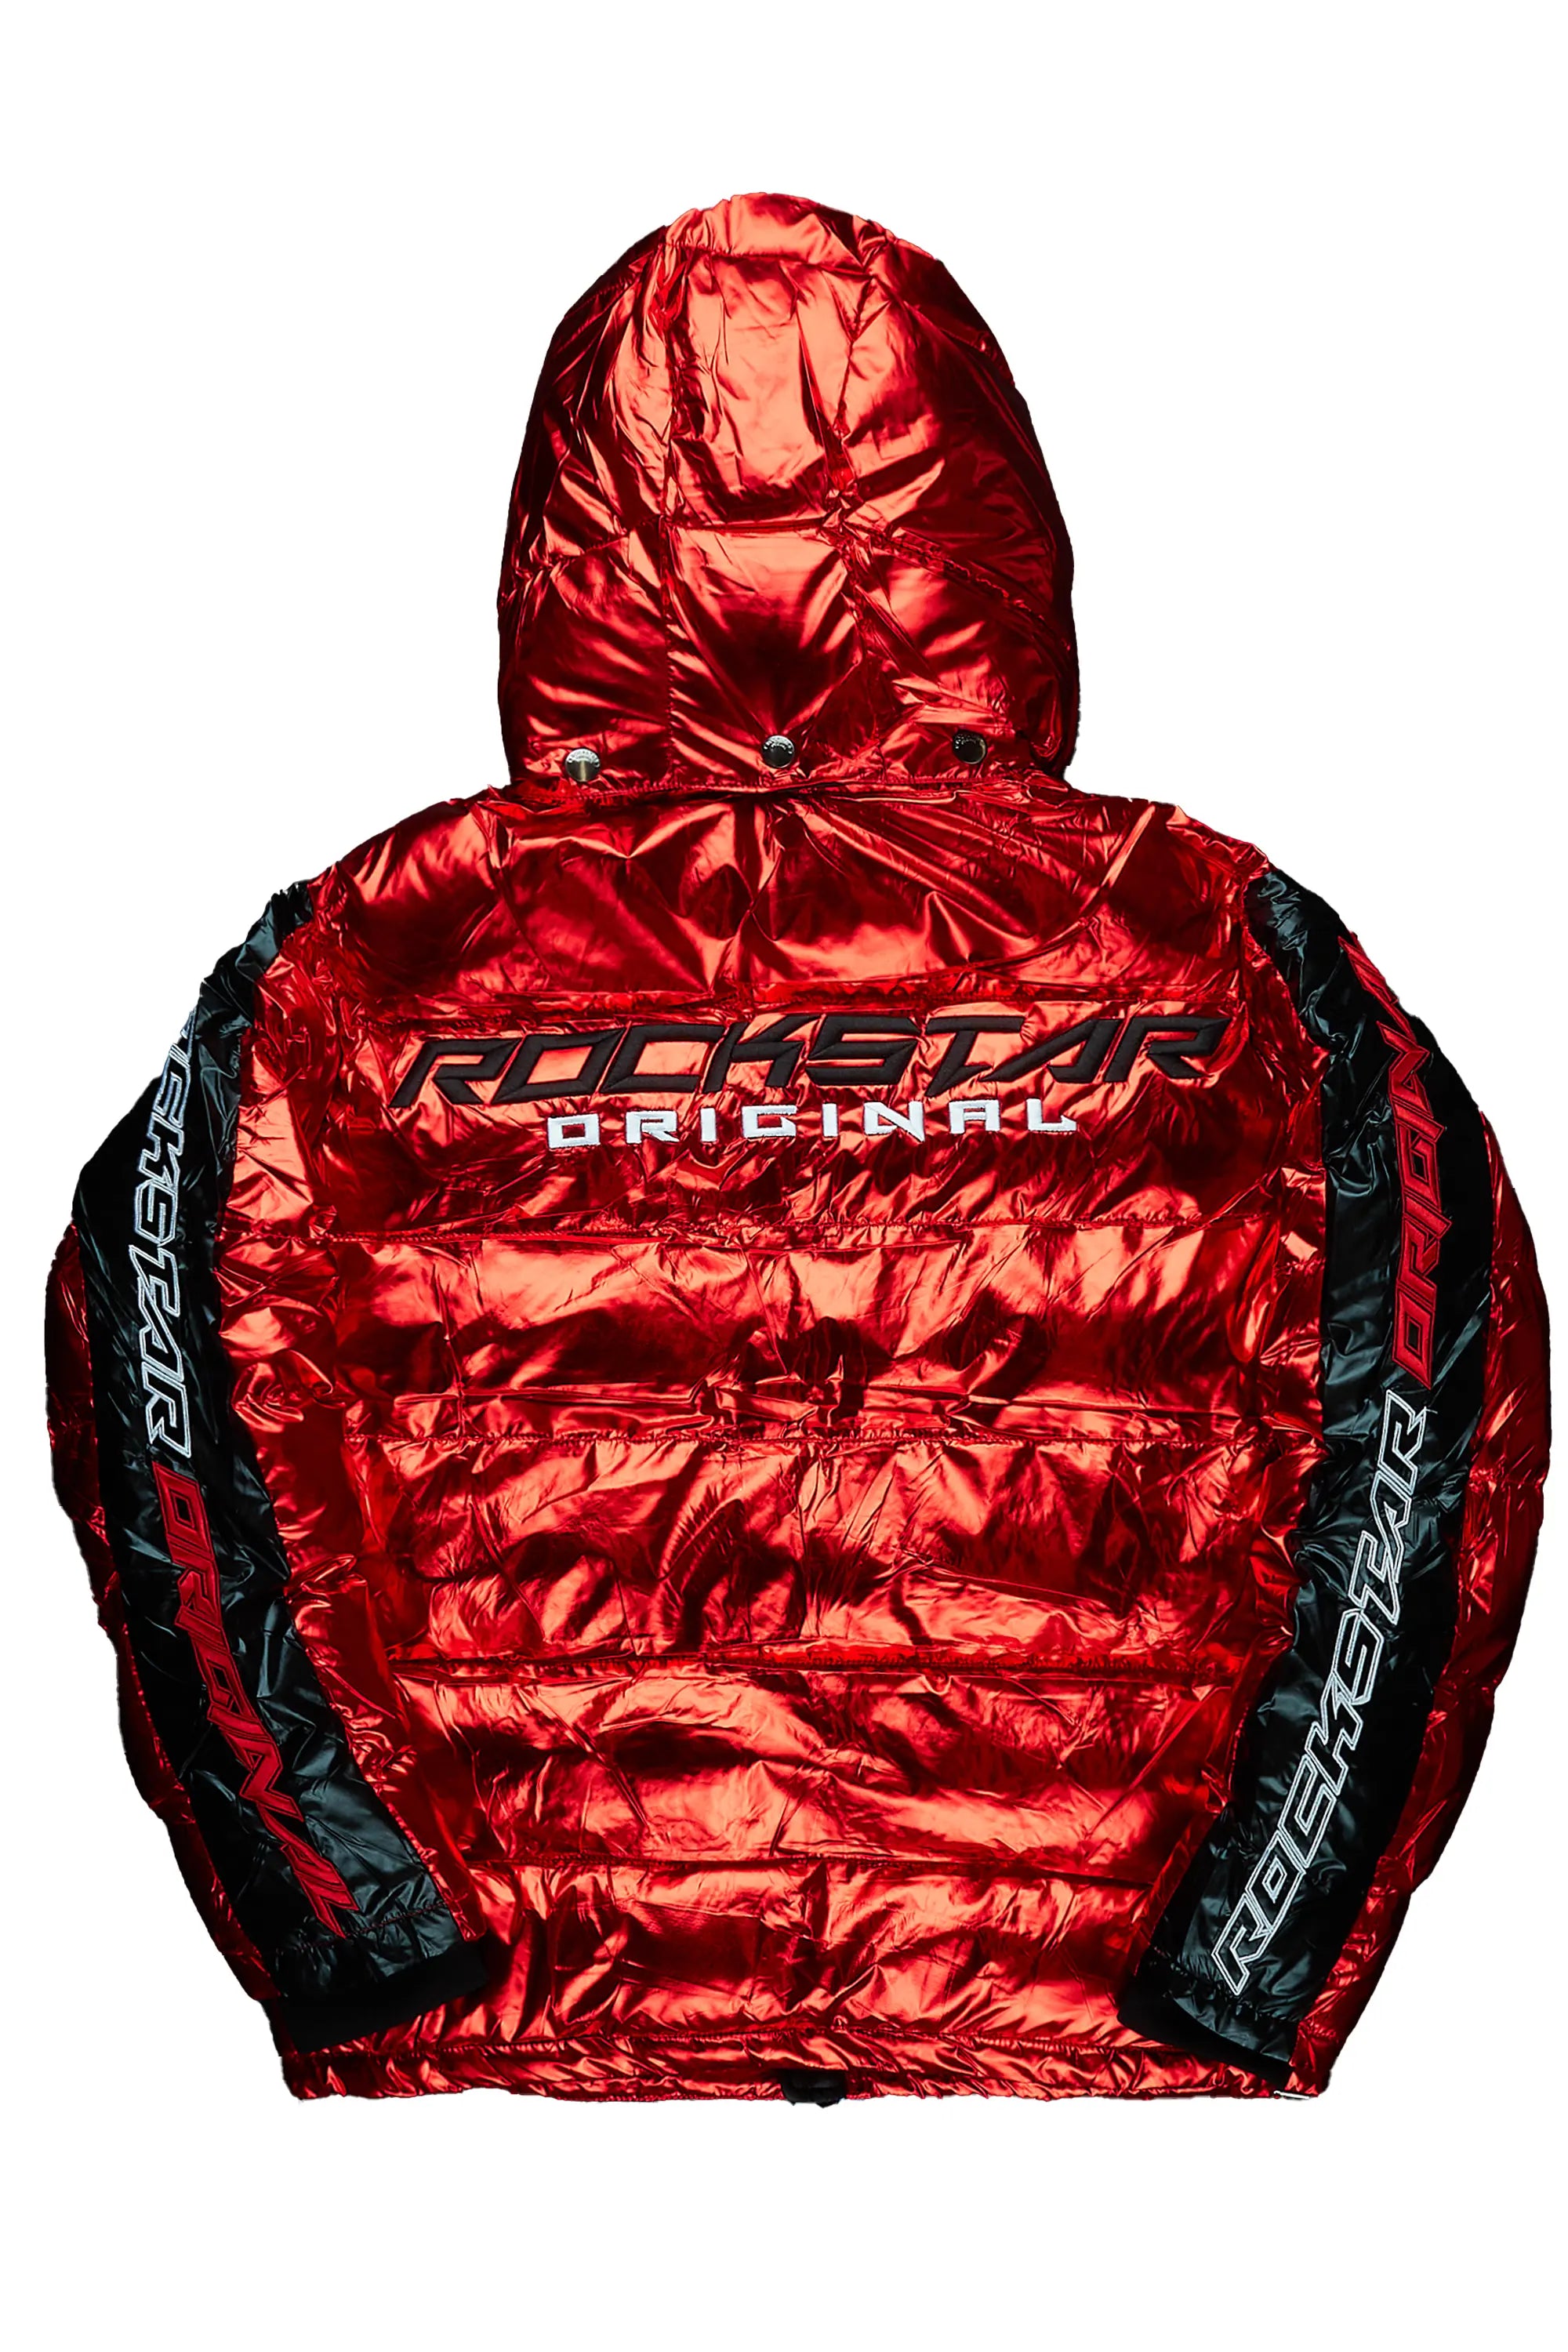 Metallic Red Alasia Puffer Jacket– Rockstar Original